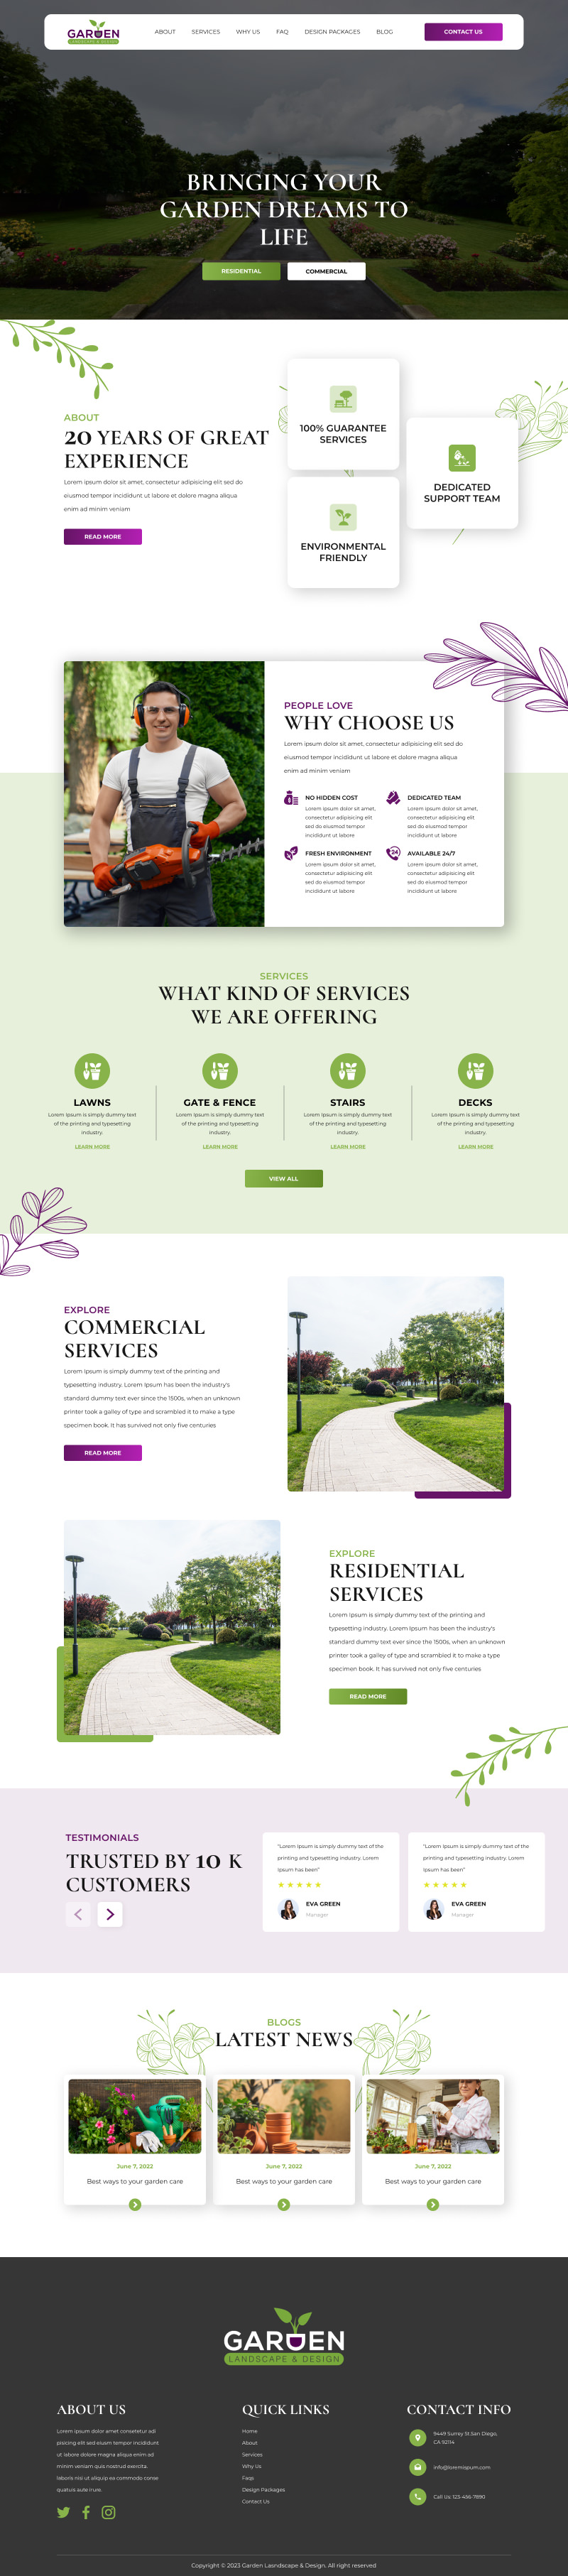 Landscape Contractor website design example